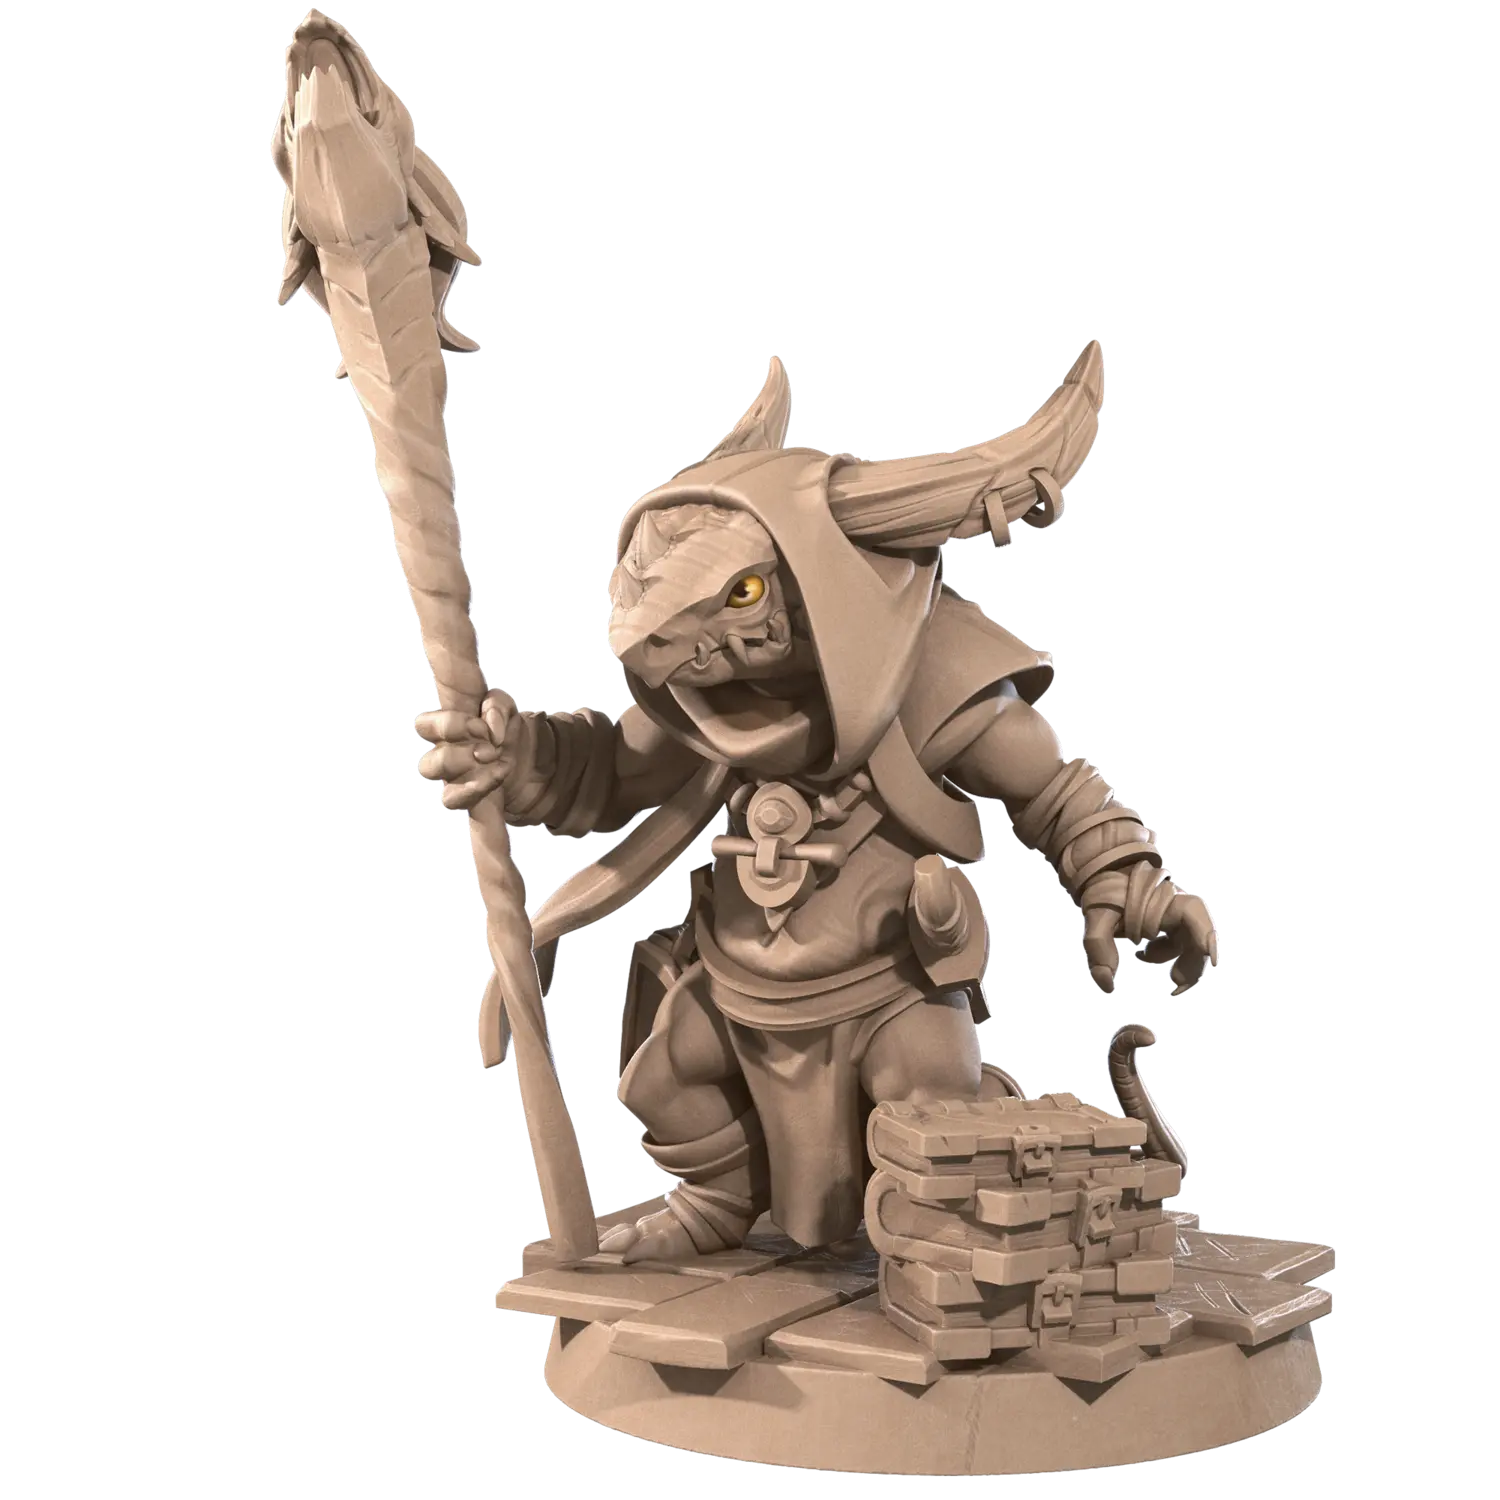 DnD Druid - Kobold - Miniature - Monsters - Priest - Sorcerer - Wizard Gnarl  Druid - Kobold - Miniature - Monsters - Priest - Sorcerer - Wizard sold by DoubleHitShop